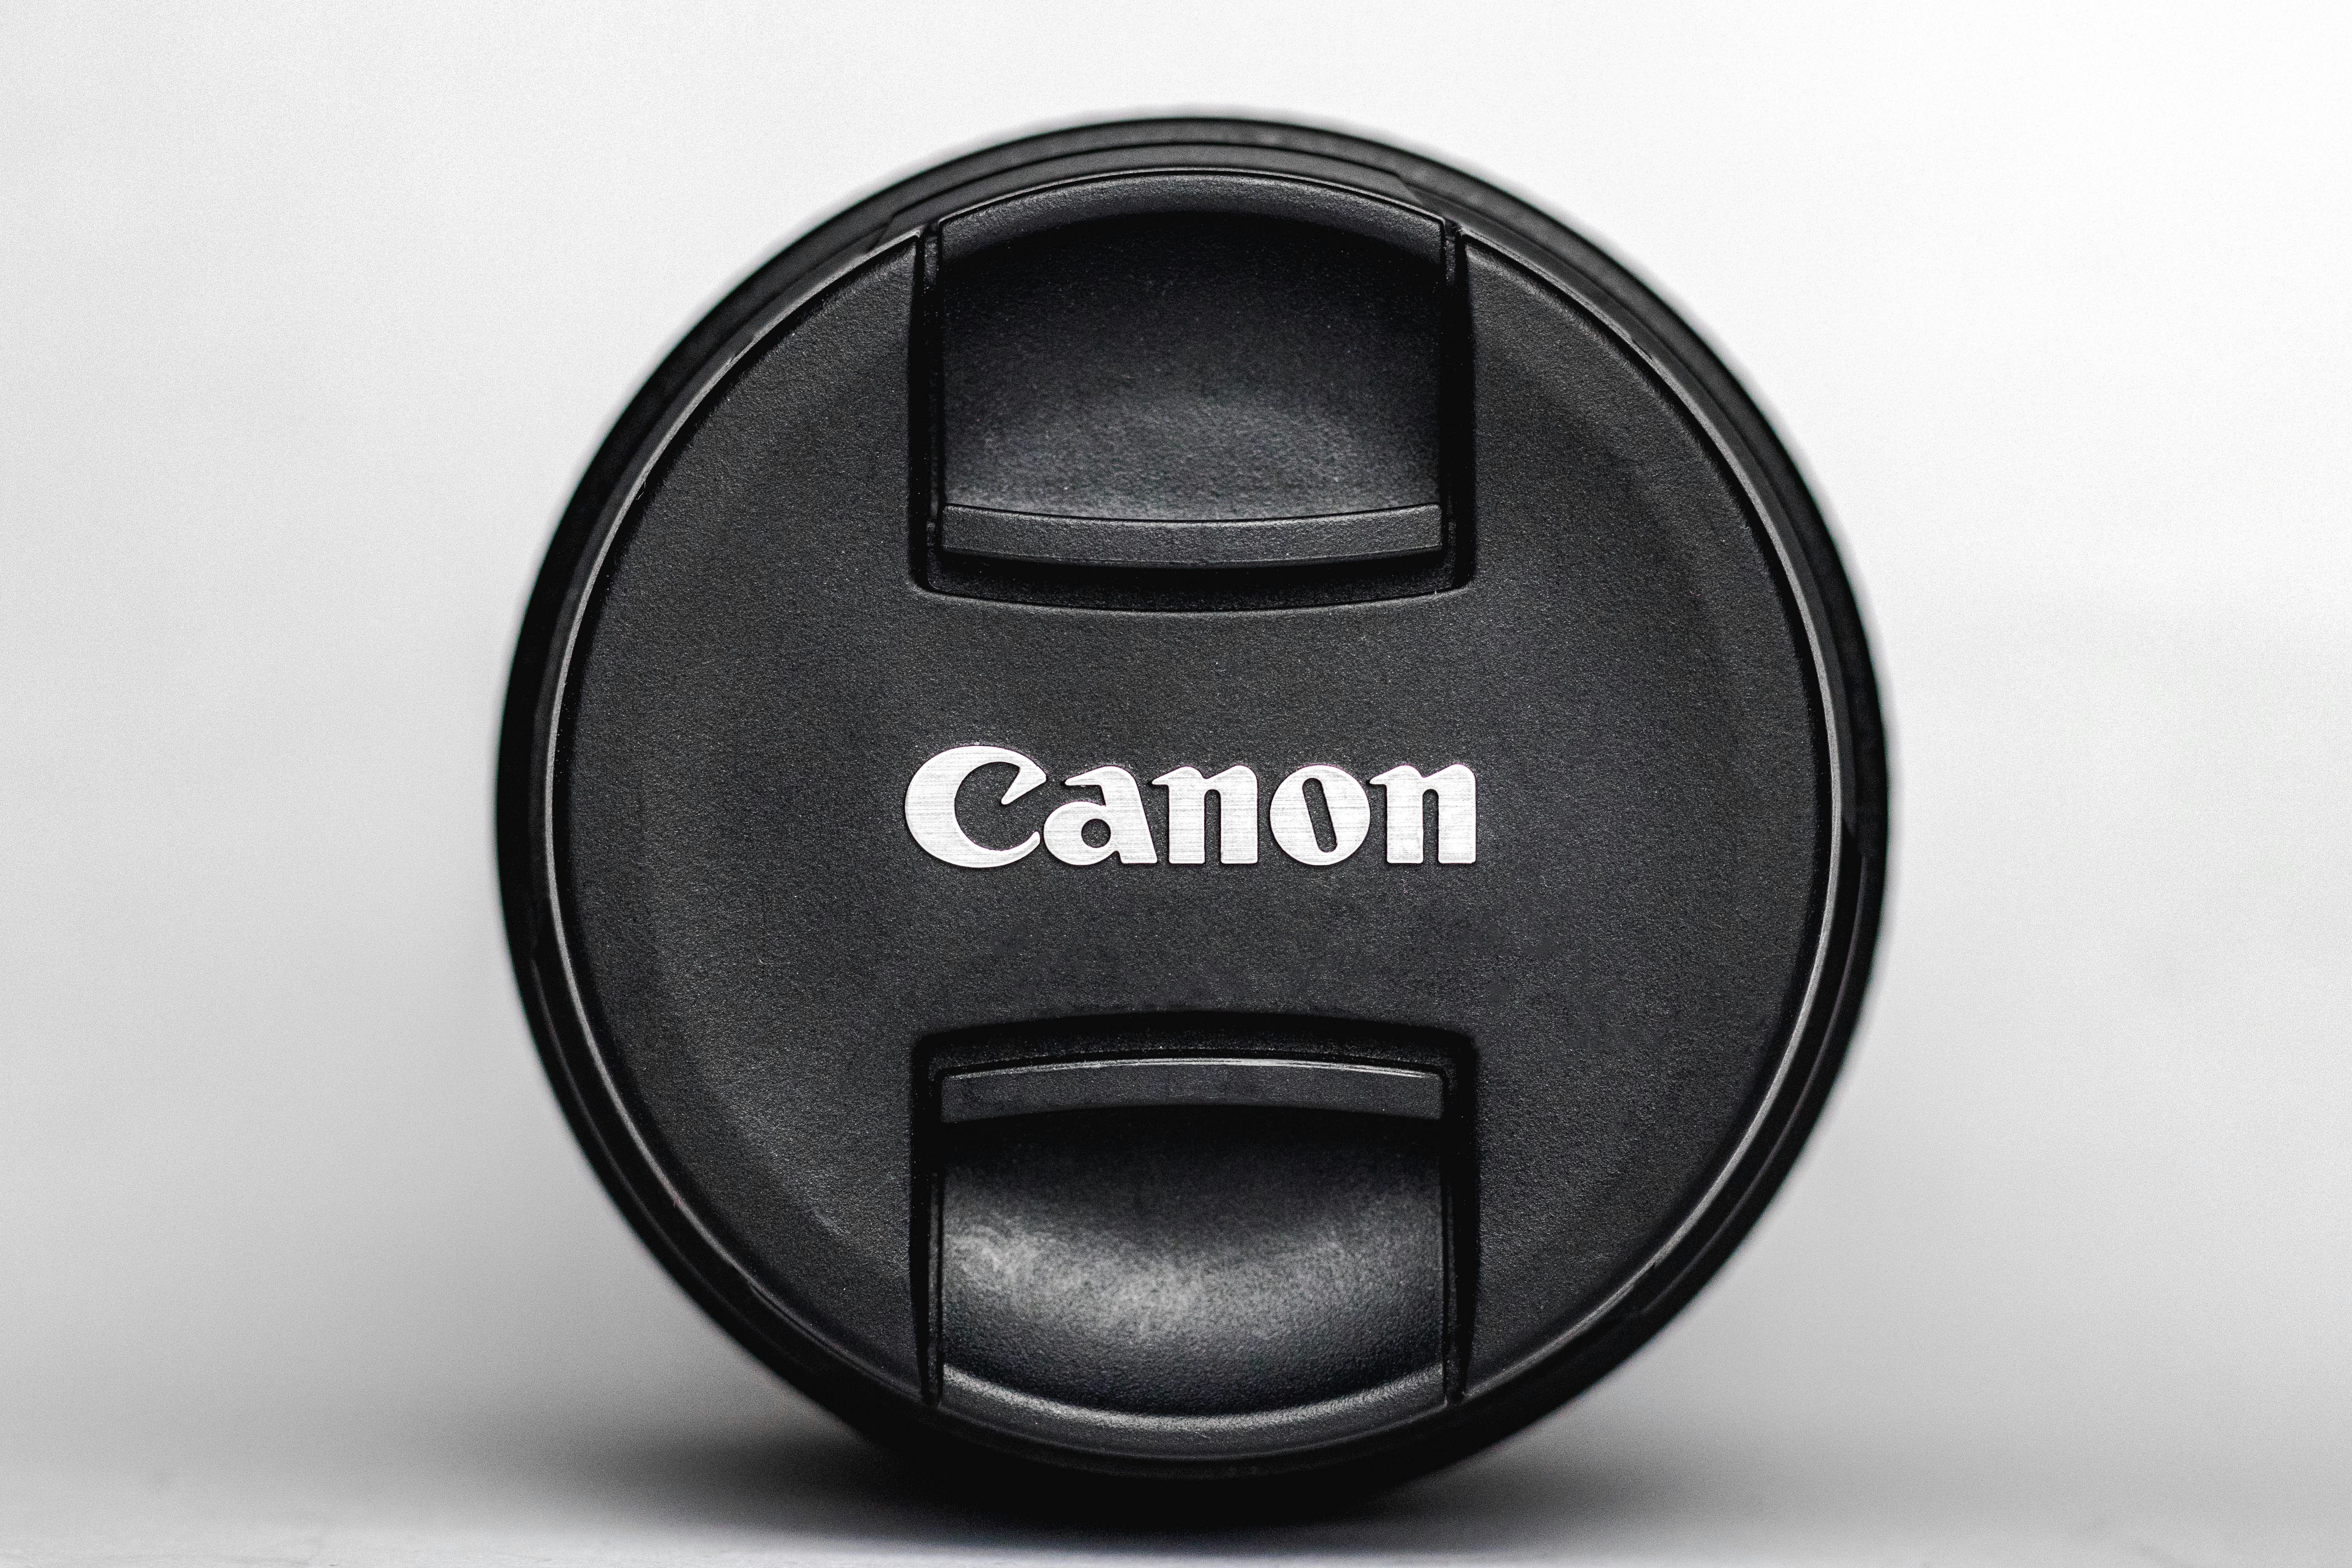 black Canon lens cover